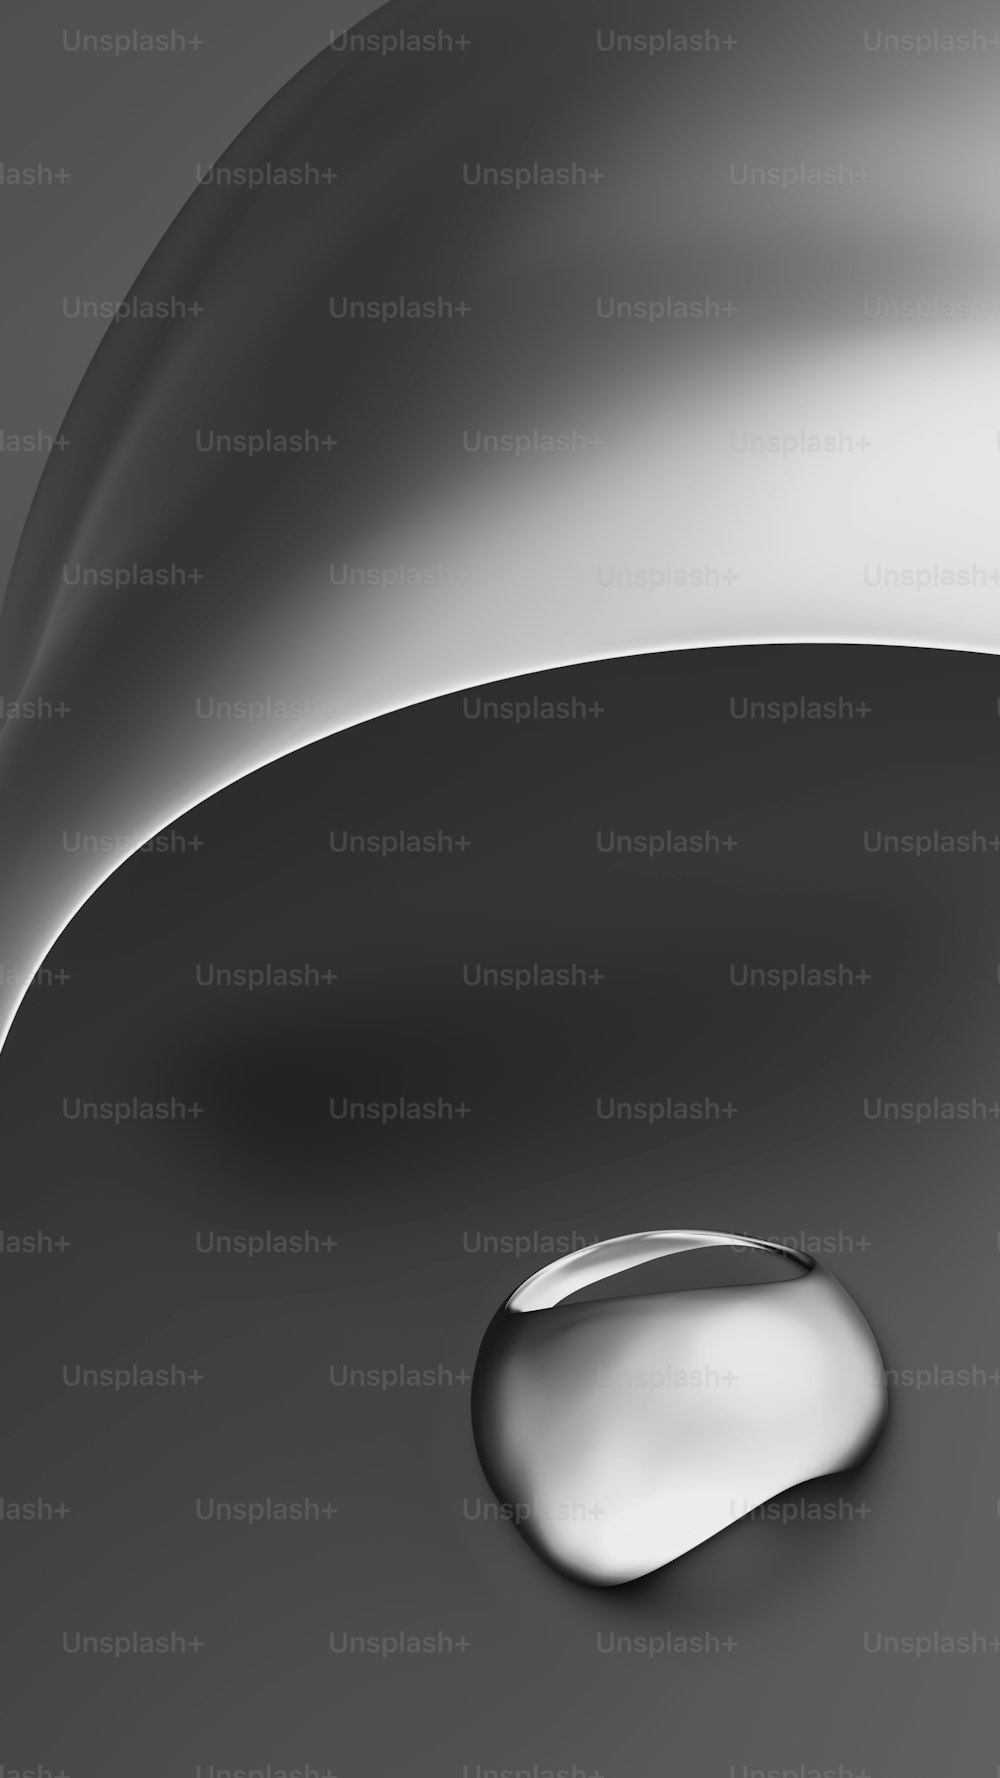 Gray and white Louis Vuitton logo photo – Free Grey Image on Unsplash